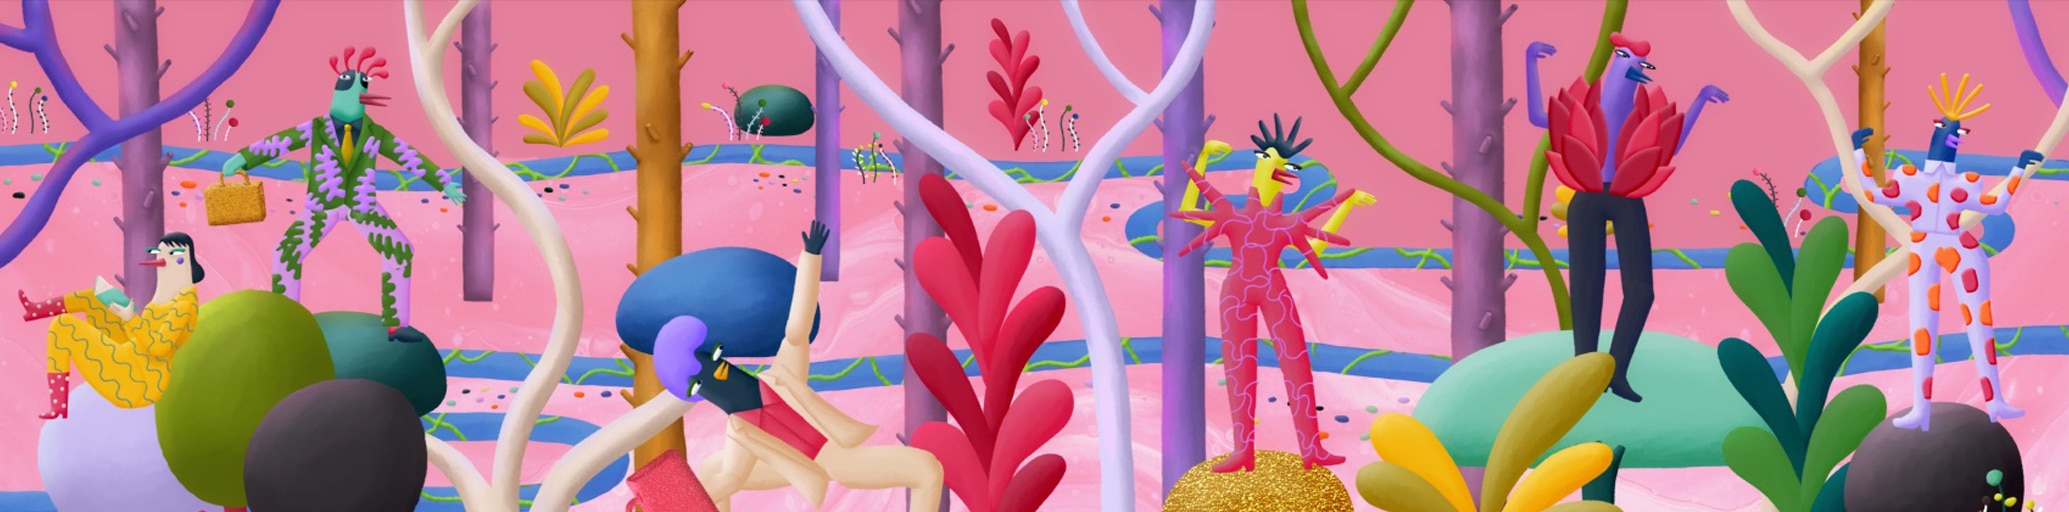 detail of artist Jordan Bruner's illustrations of fantastical, multicolored animals in an imagined forest scene on pink background.